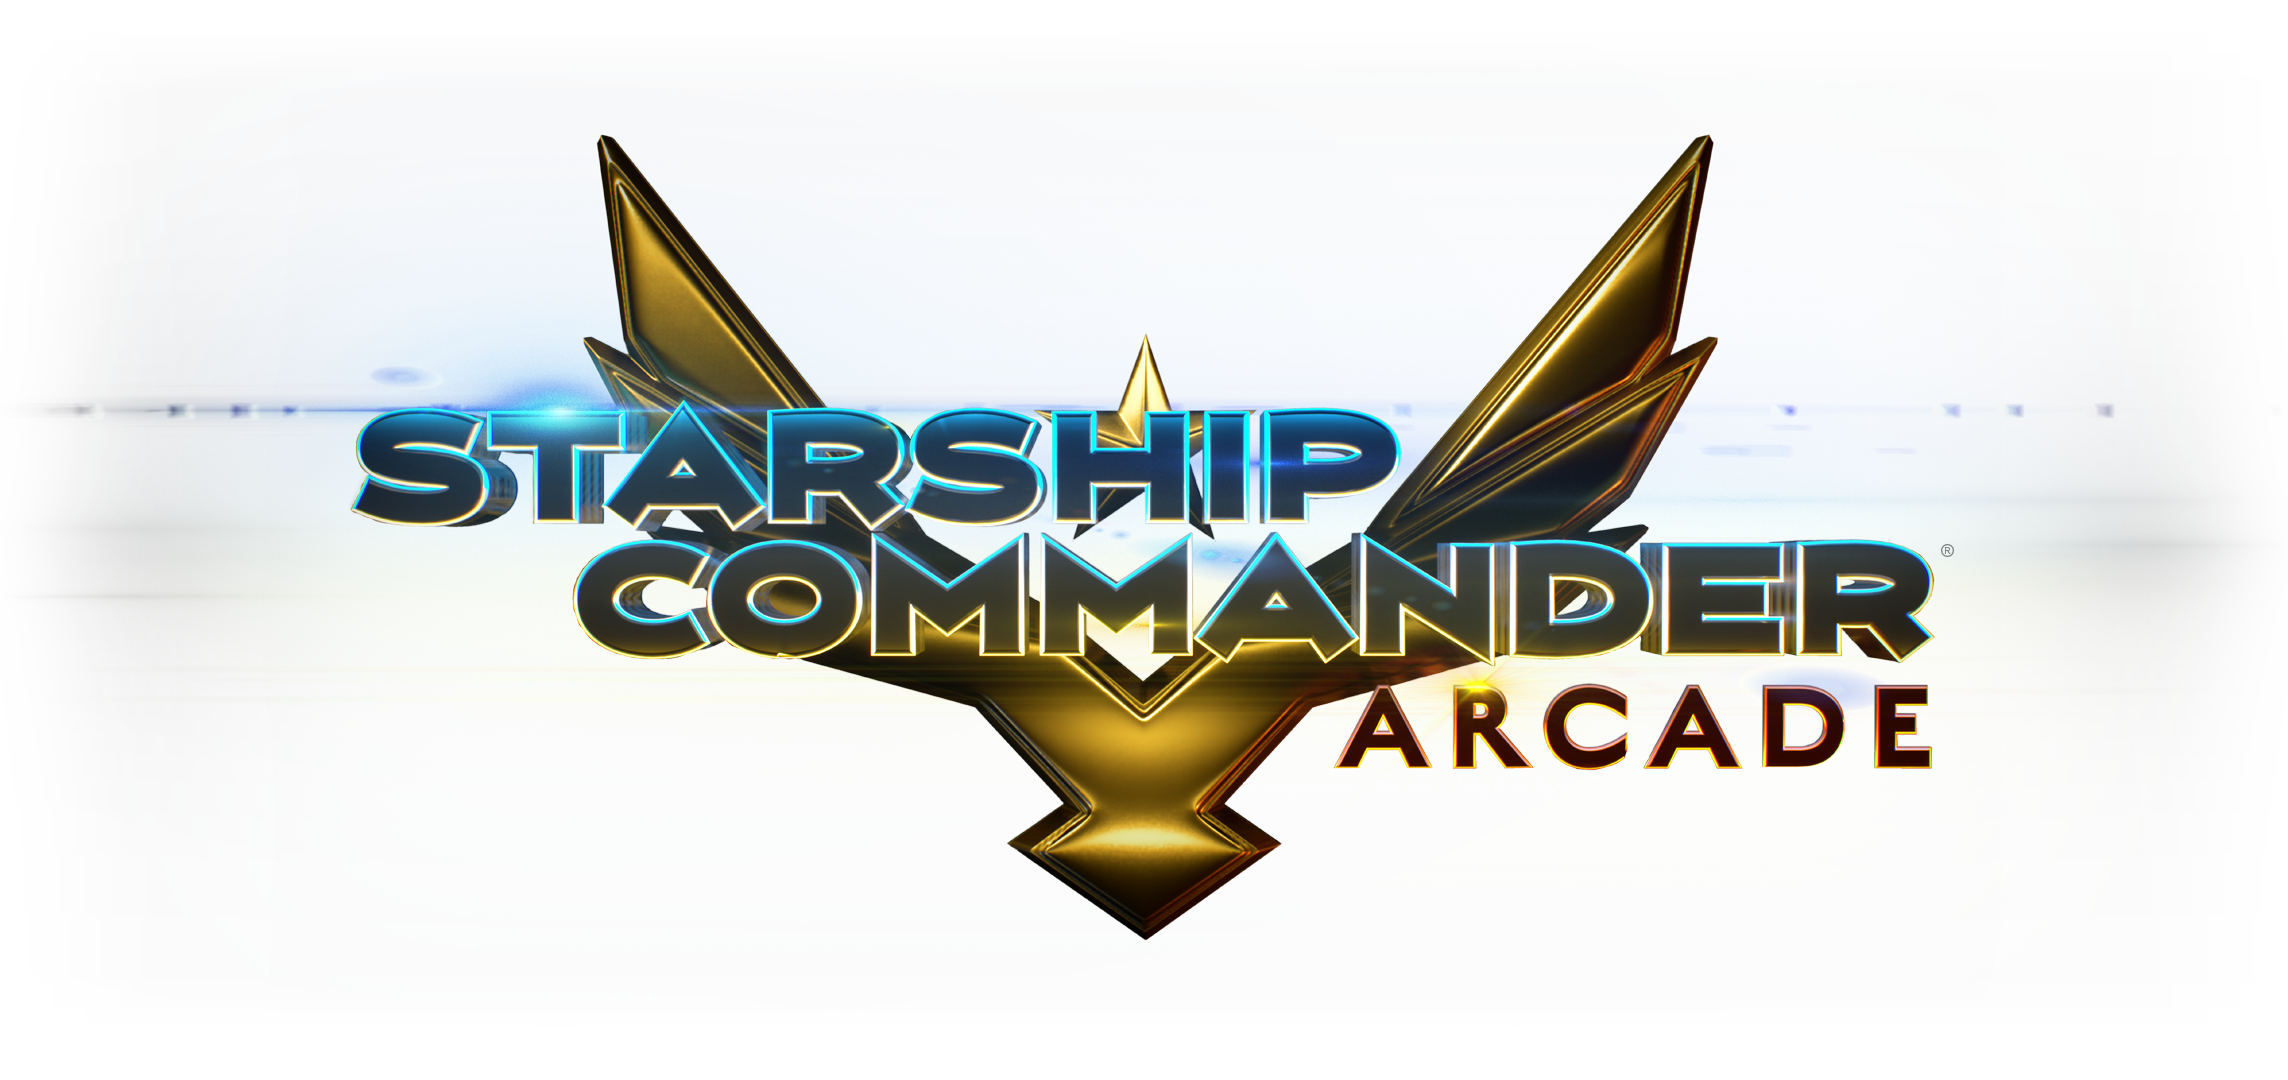 Starship Commander Arcade Logo to be used on dark backgrounds